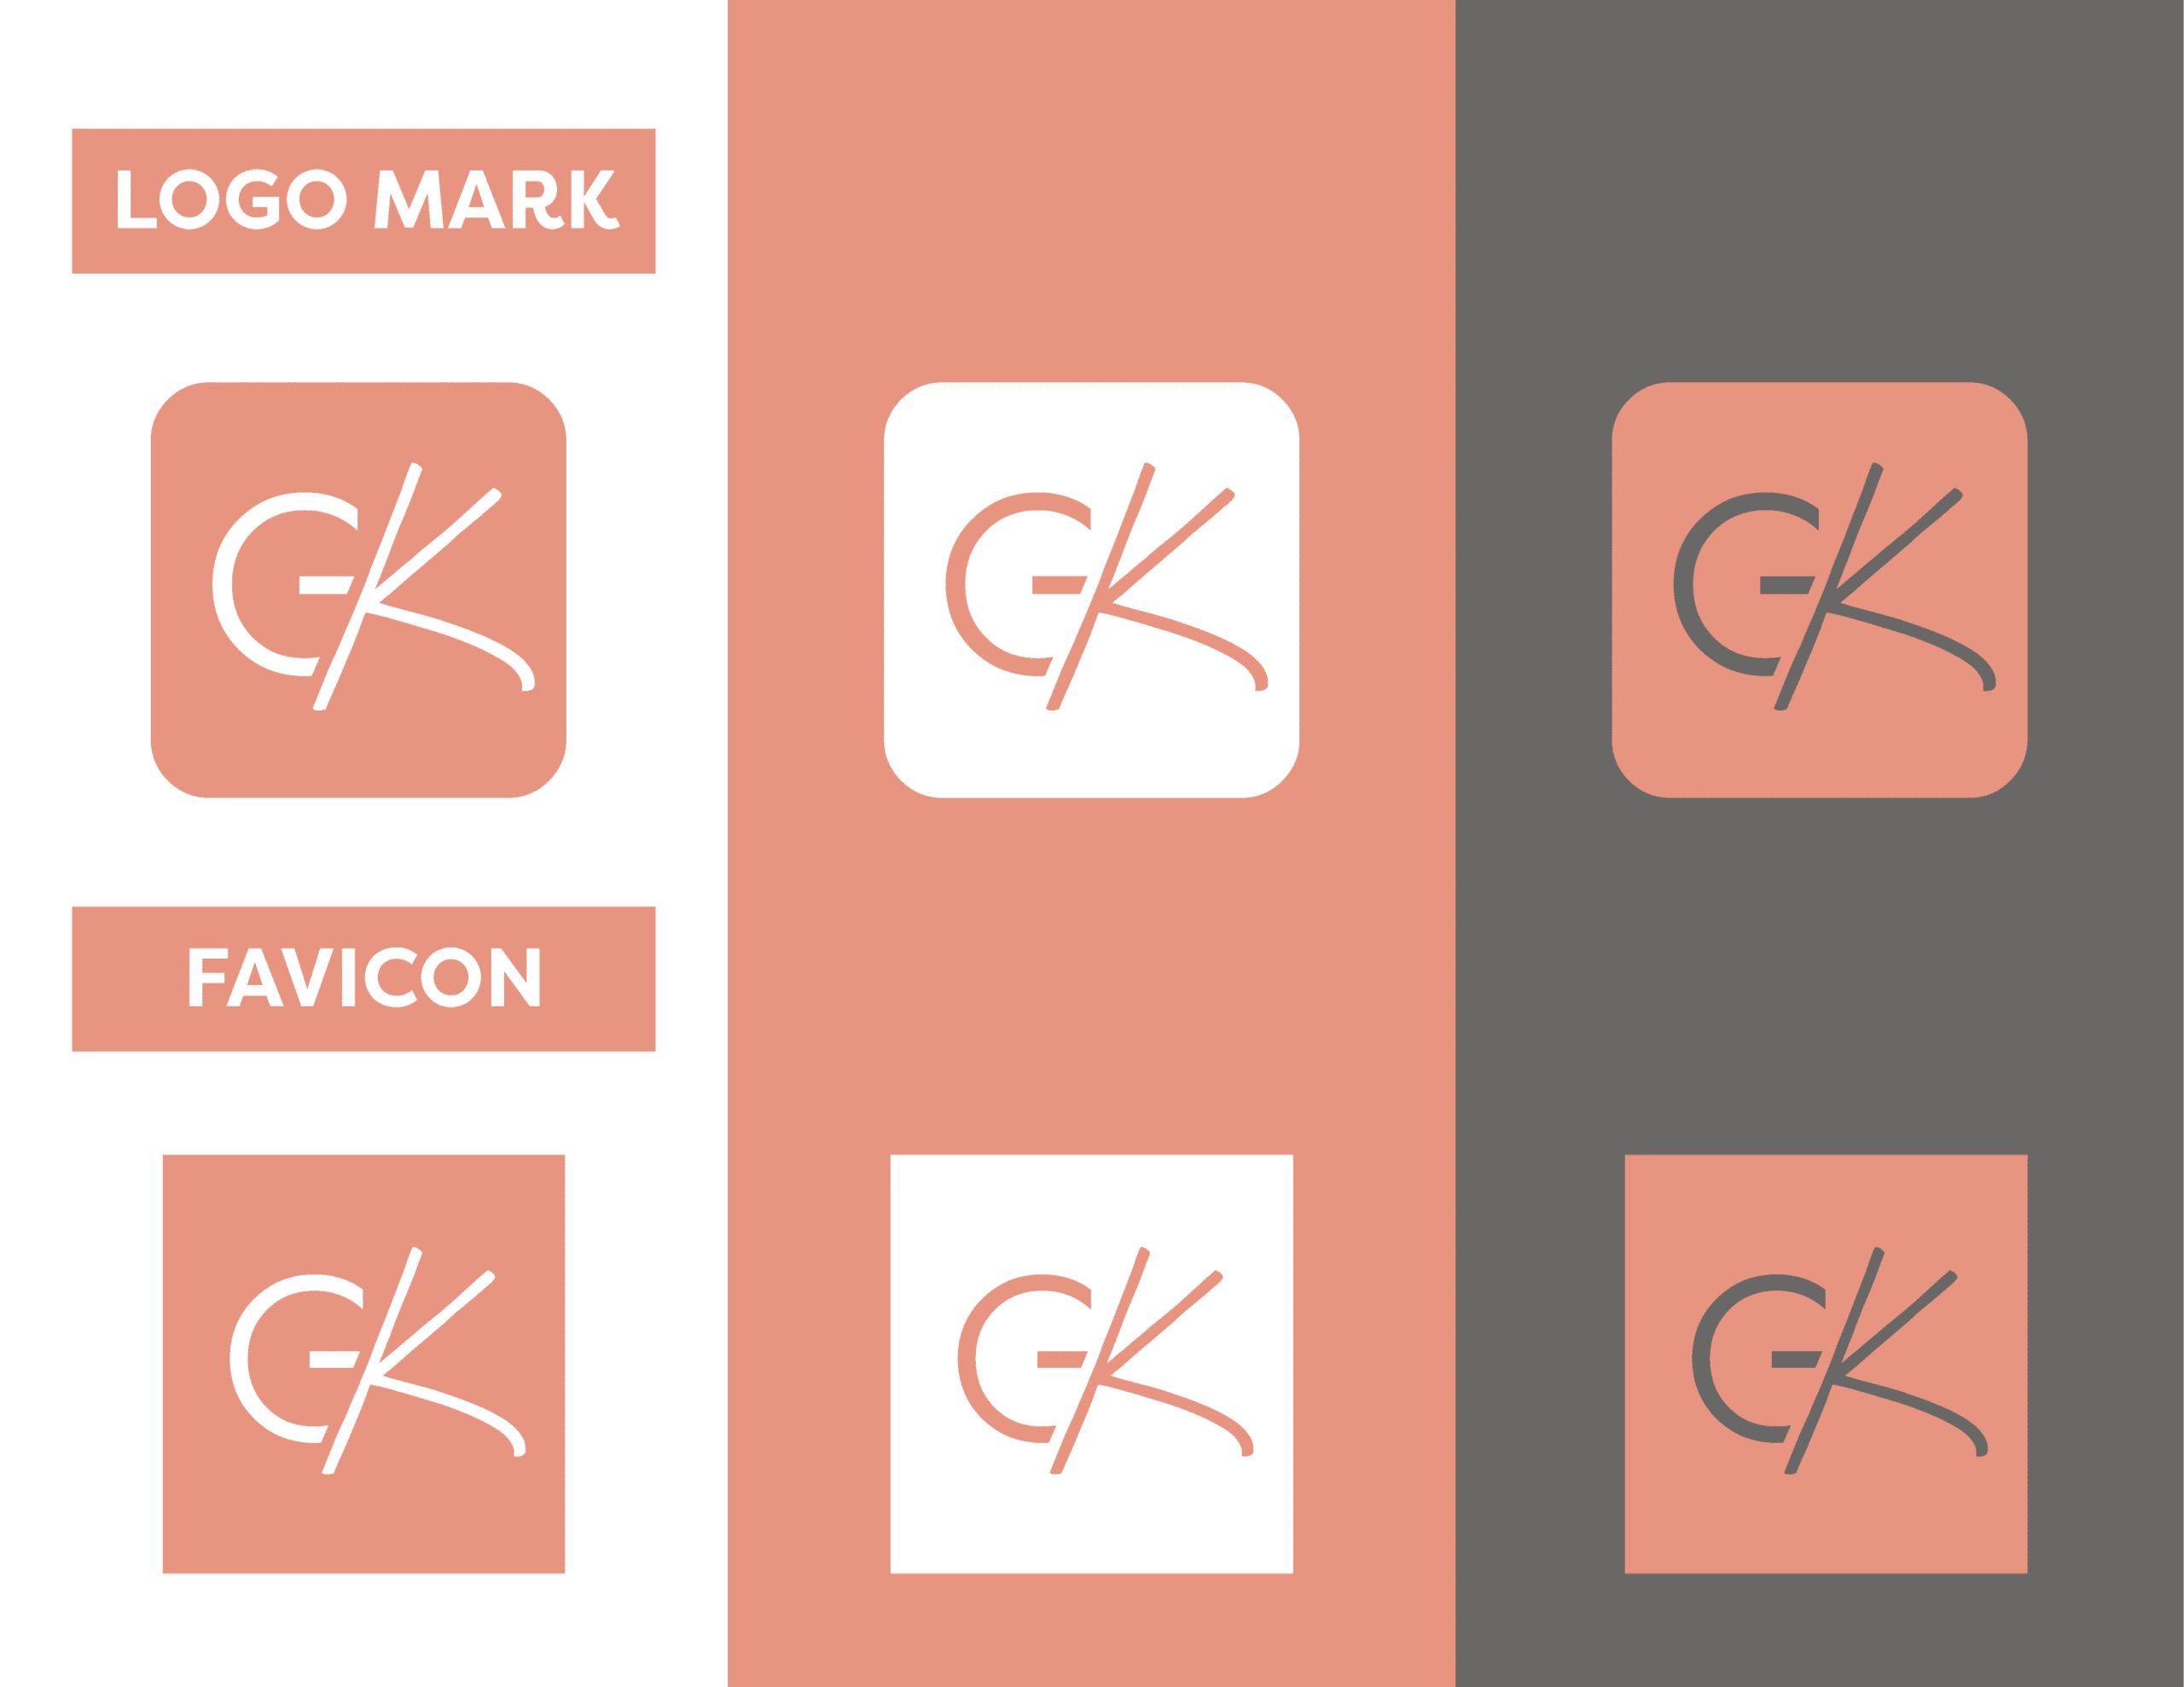 02Glam_Keeper__Logo Mark and Favicon